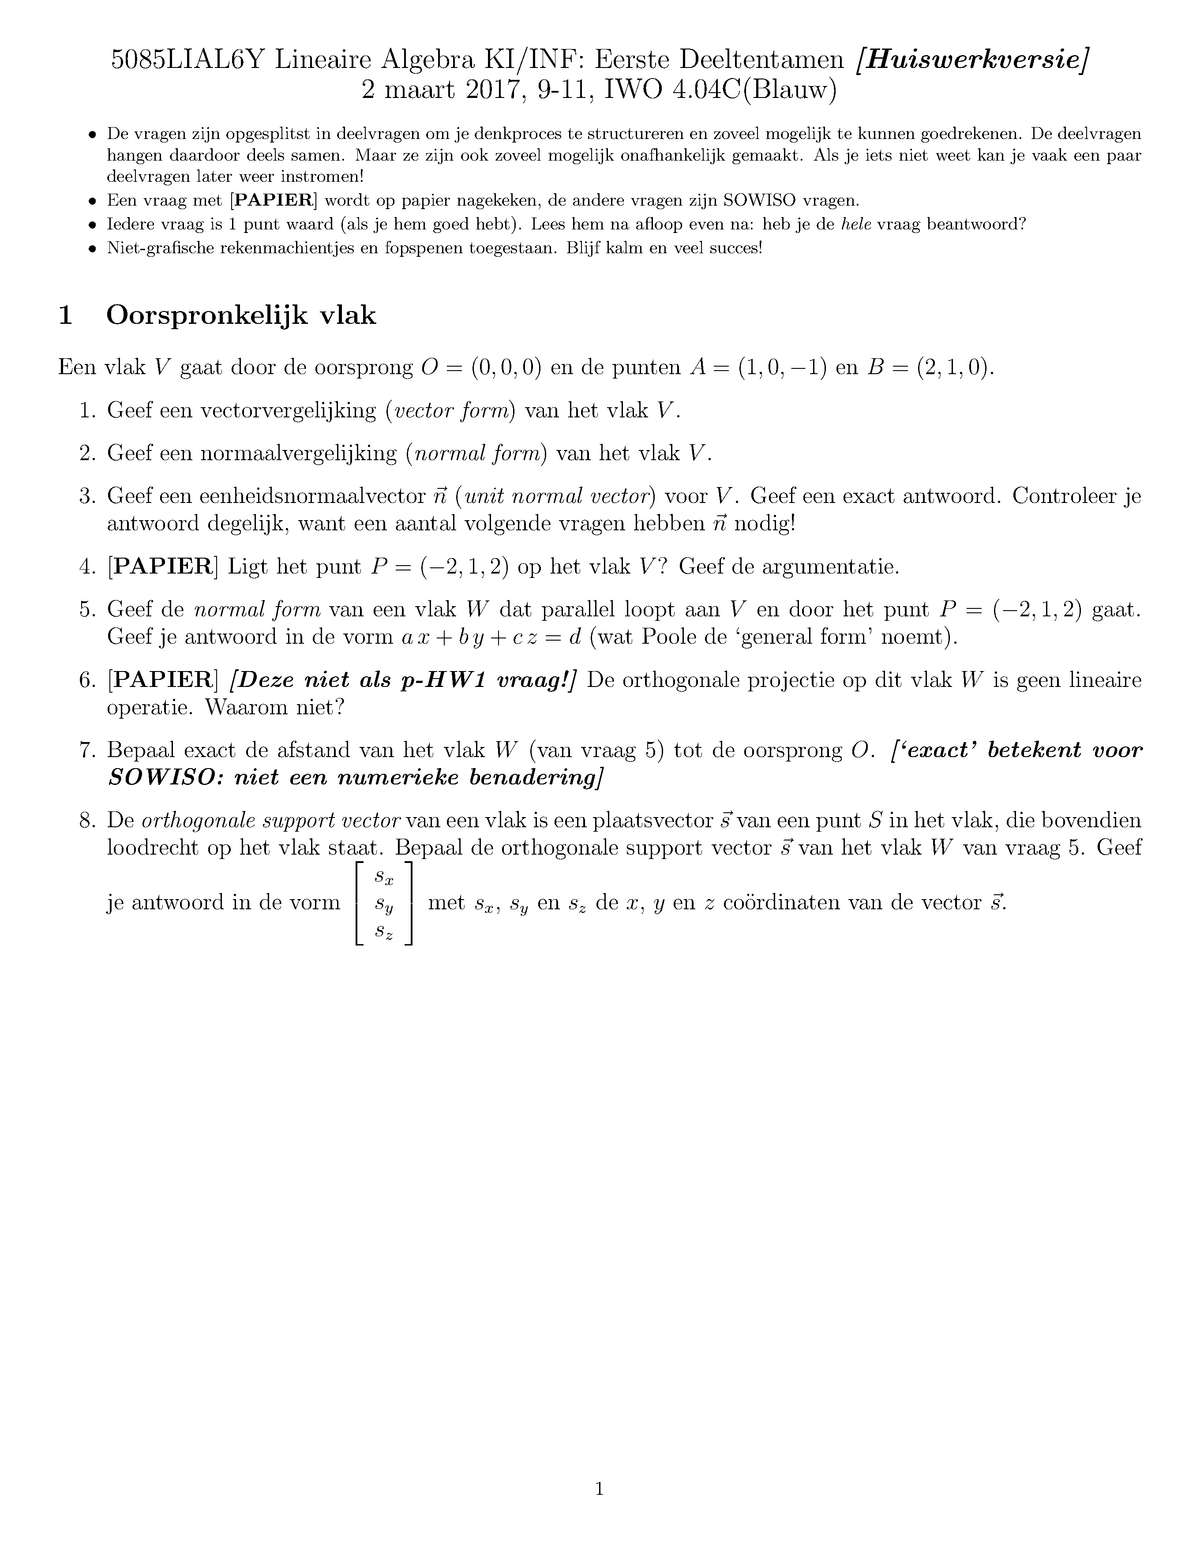 17 02 s Hw Lineaire Algebra Uva Studeersnel